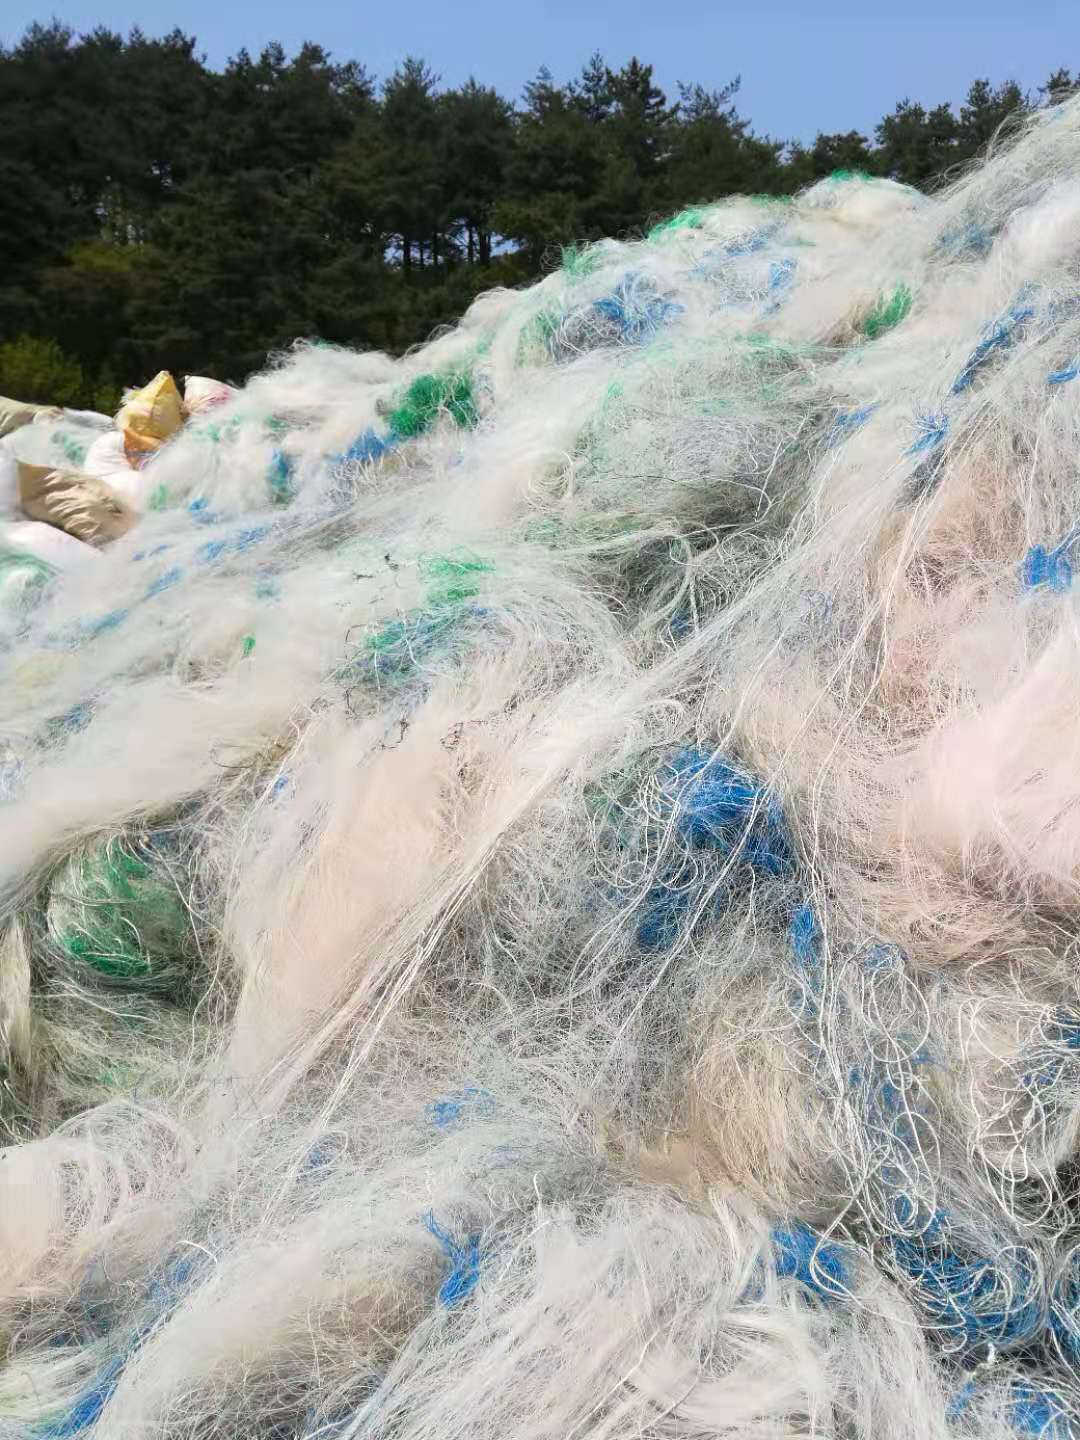 PA fishing net and carpet washing recycling line